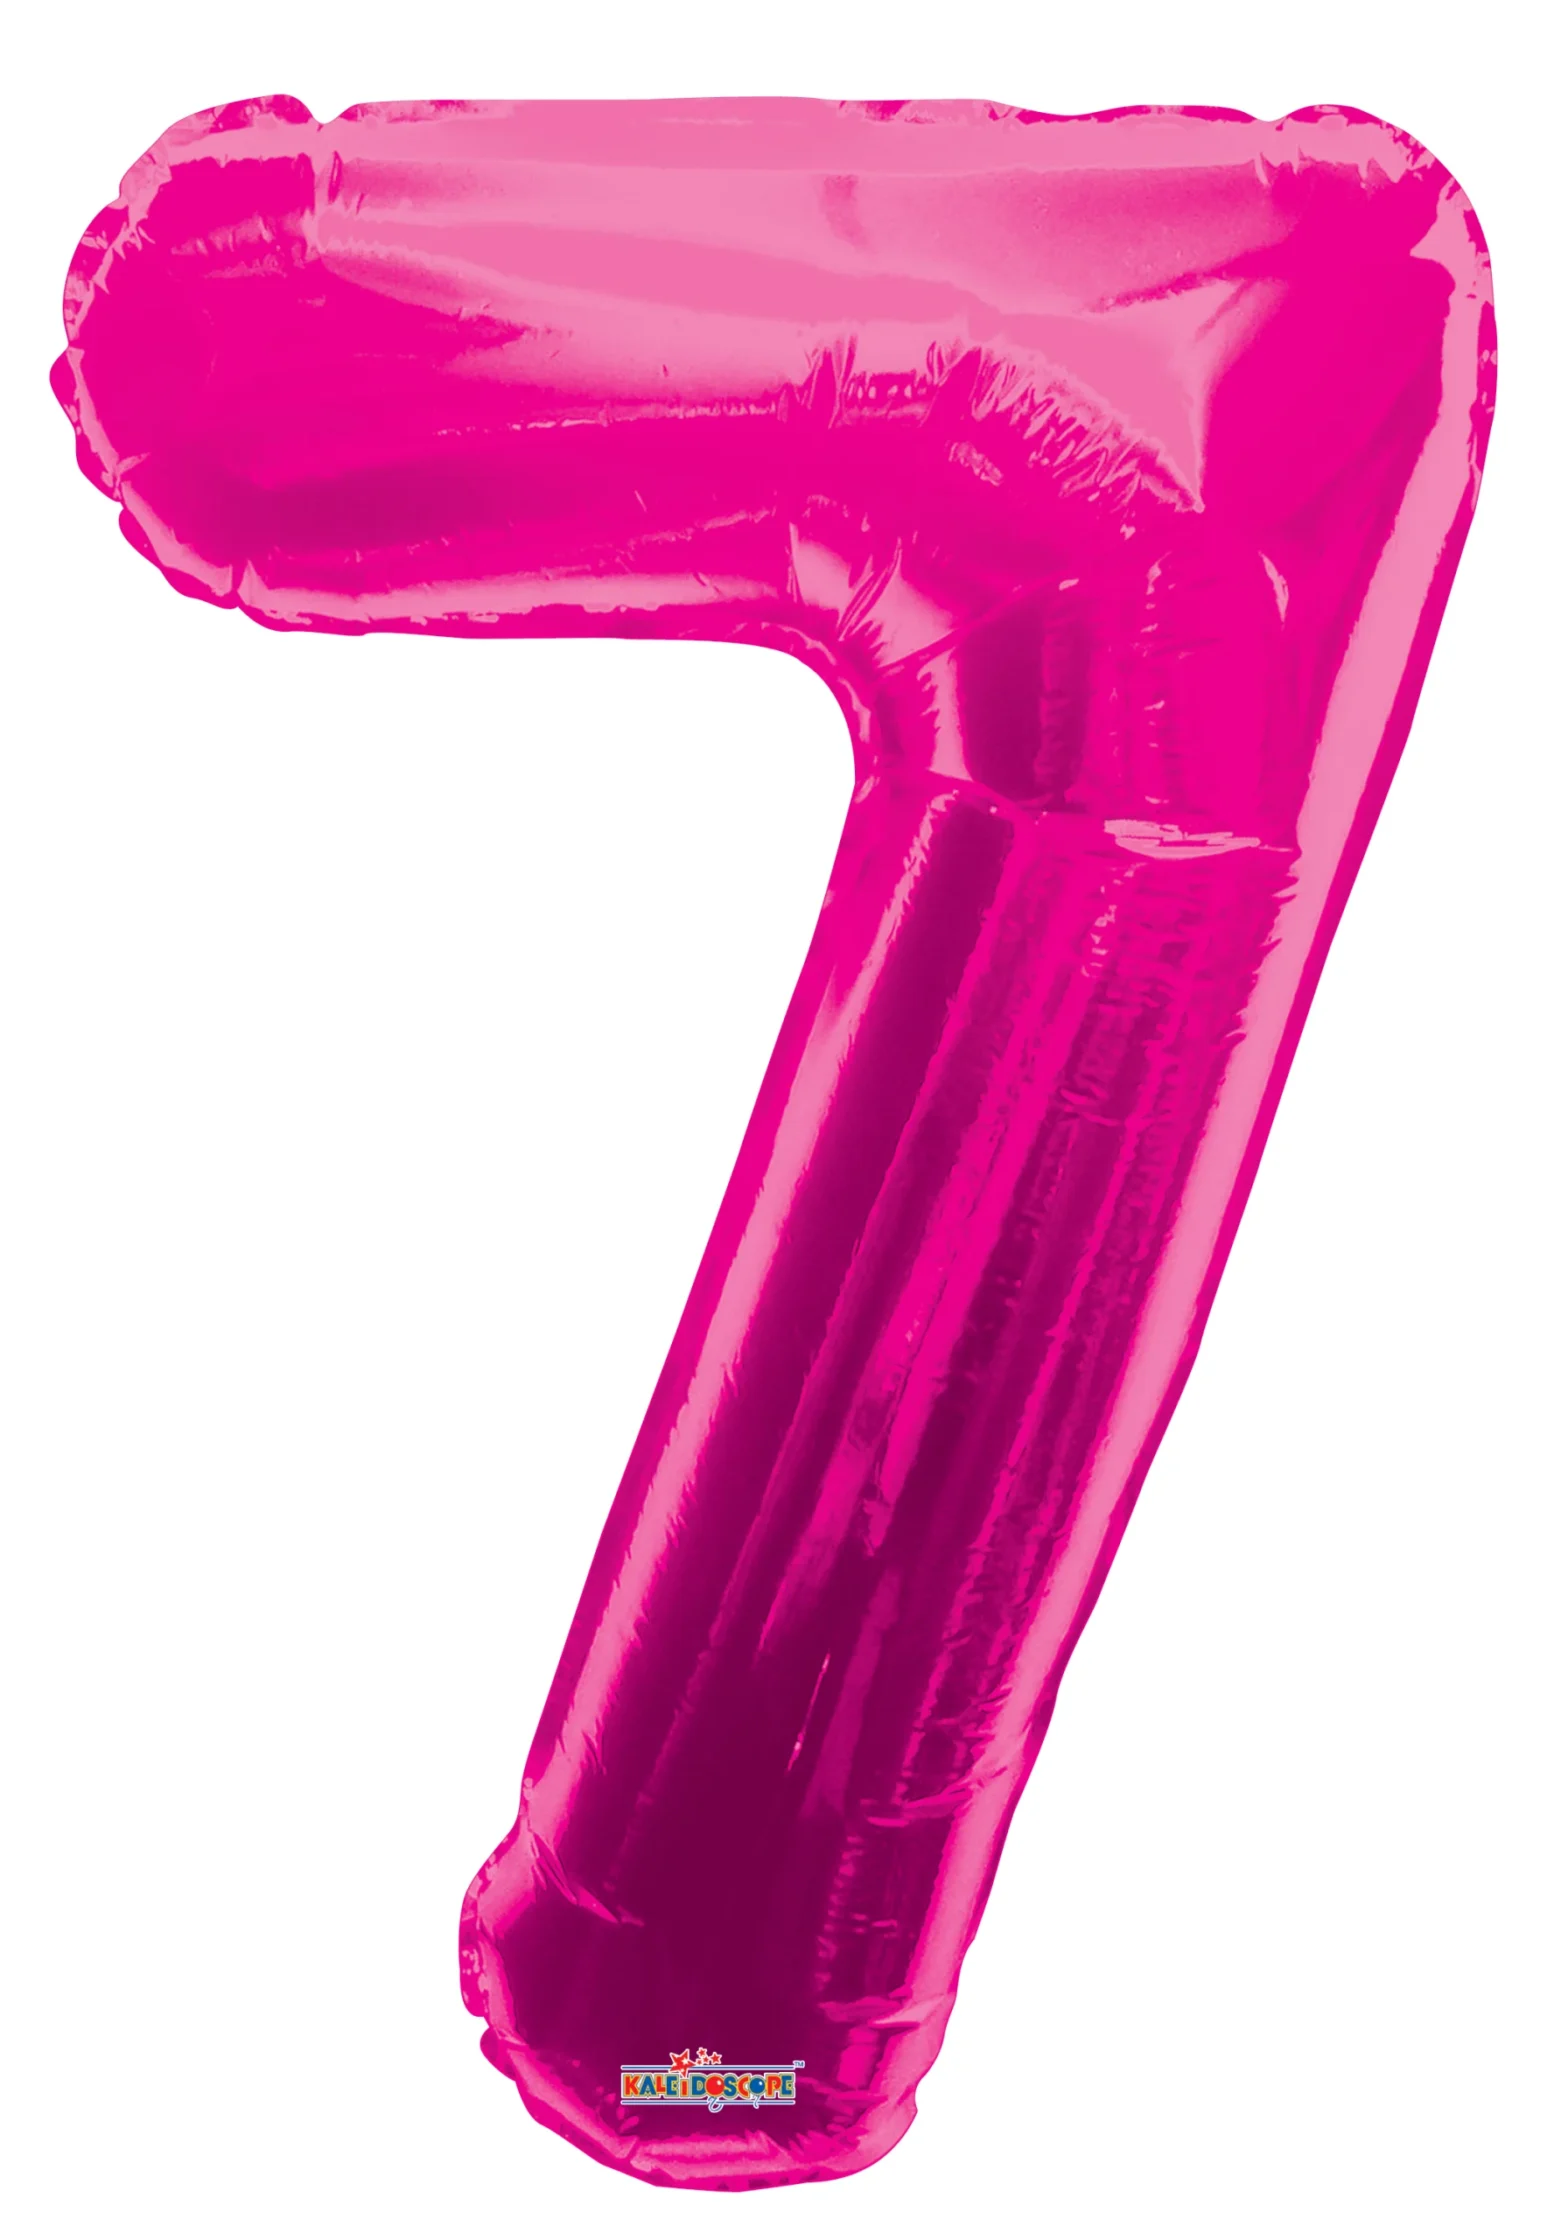 #7 Pink balloon shape 34in